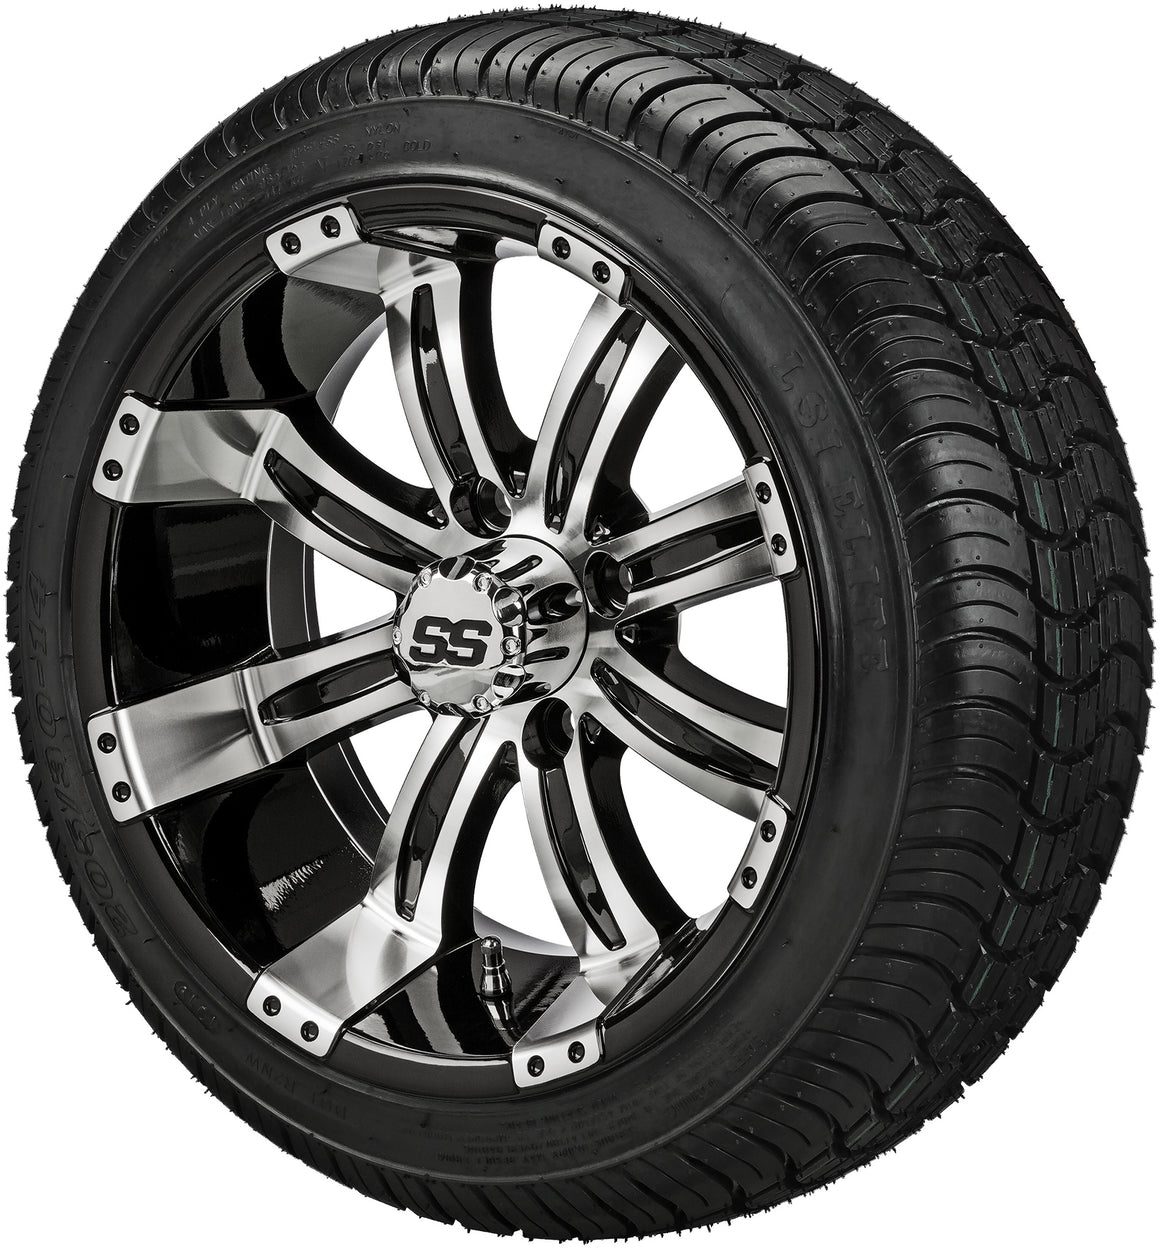 15" Casino Black/Machined on 205/35R15 LSI Elite Radial Tires